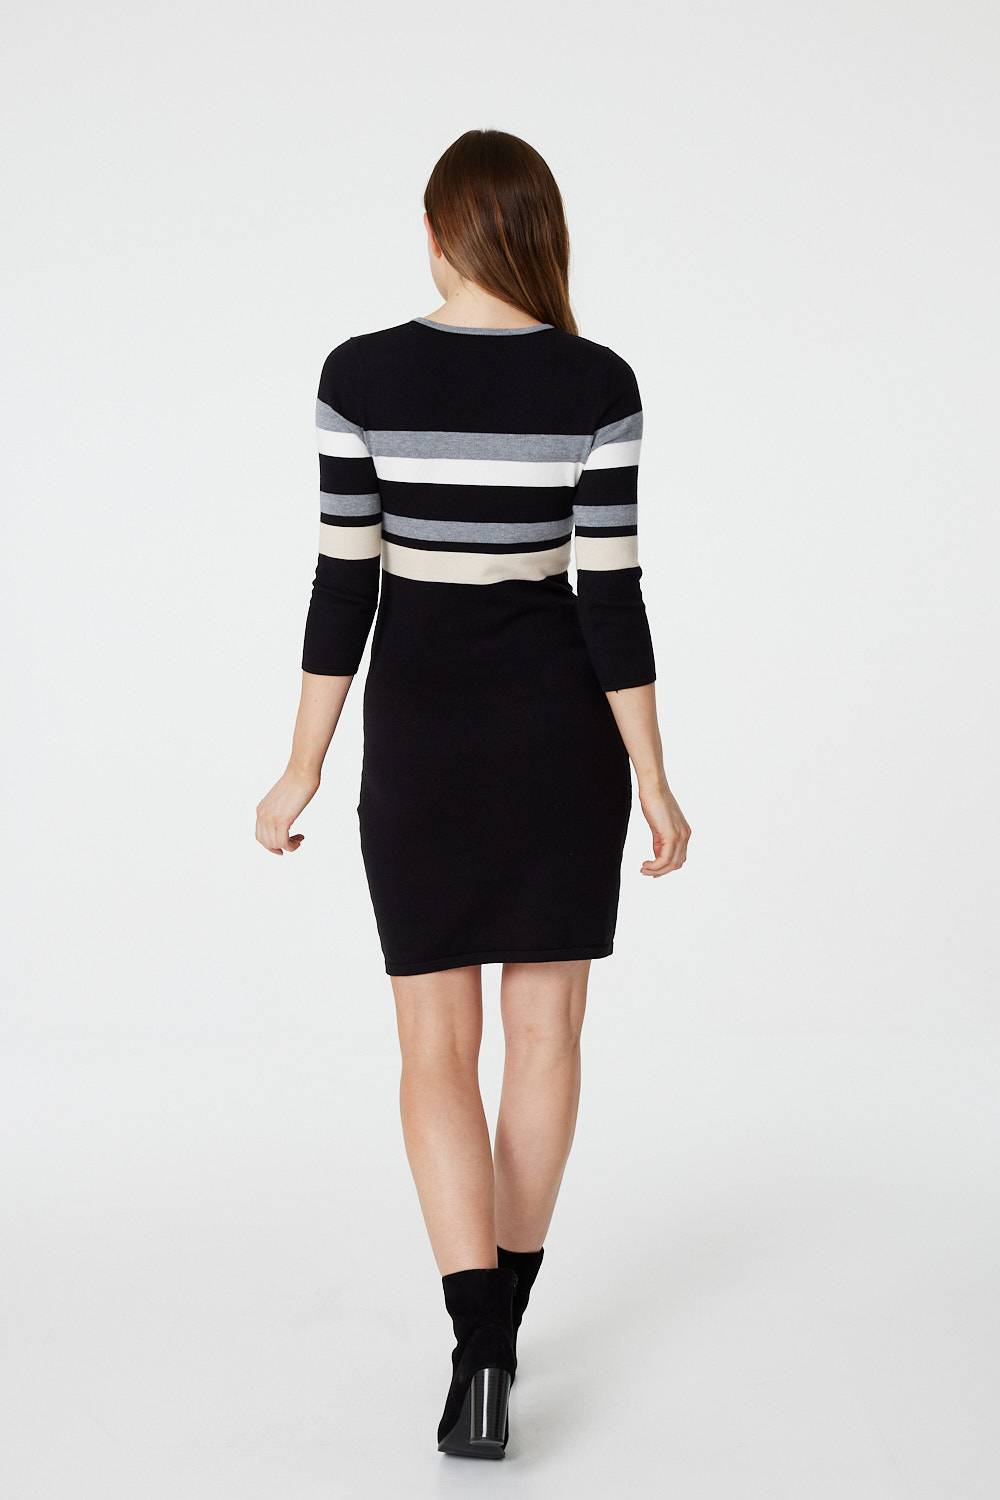 Black | Striped 3/4 Sleeve Knit Dress